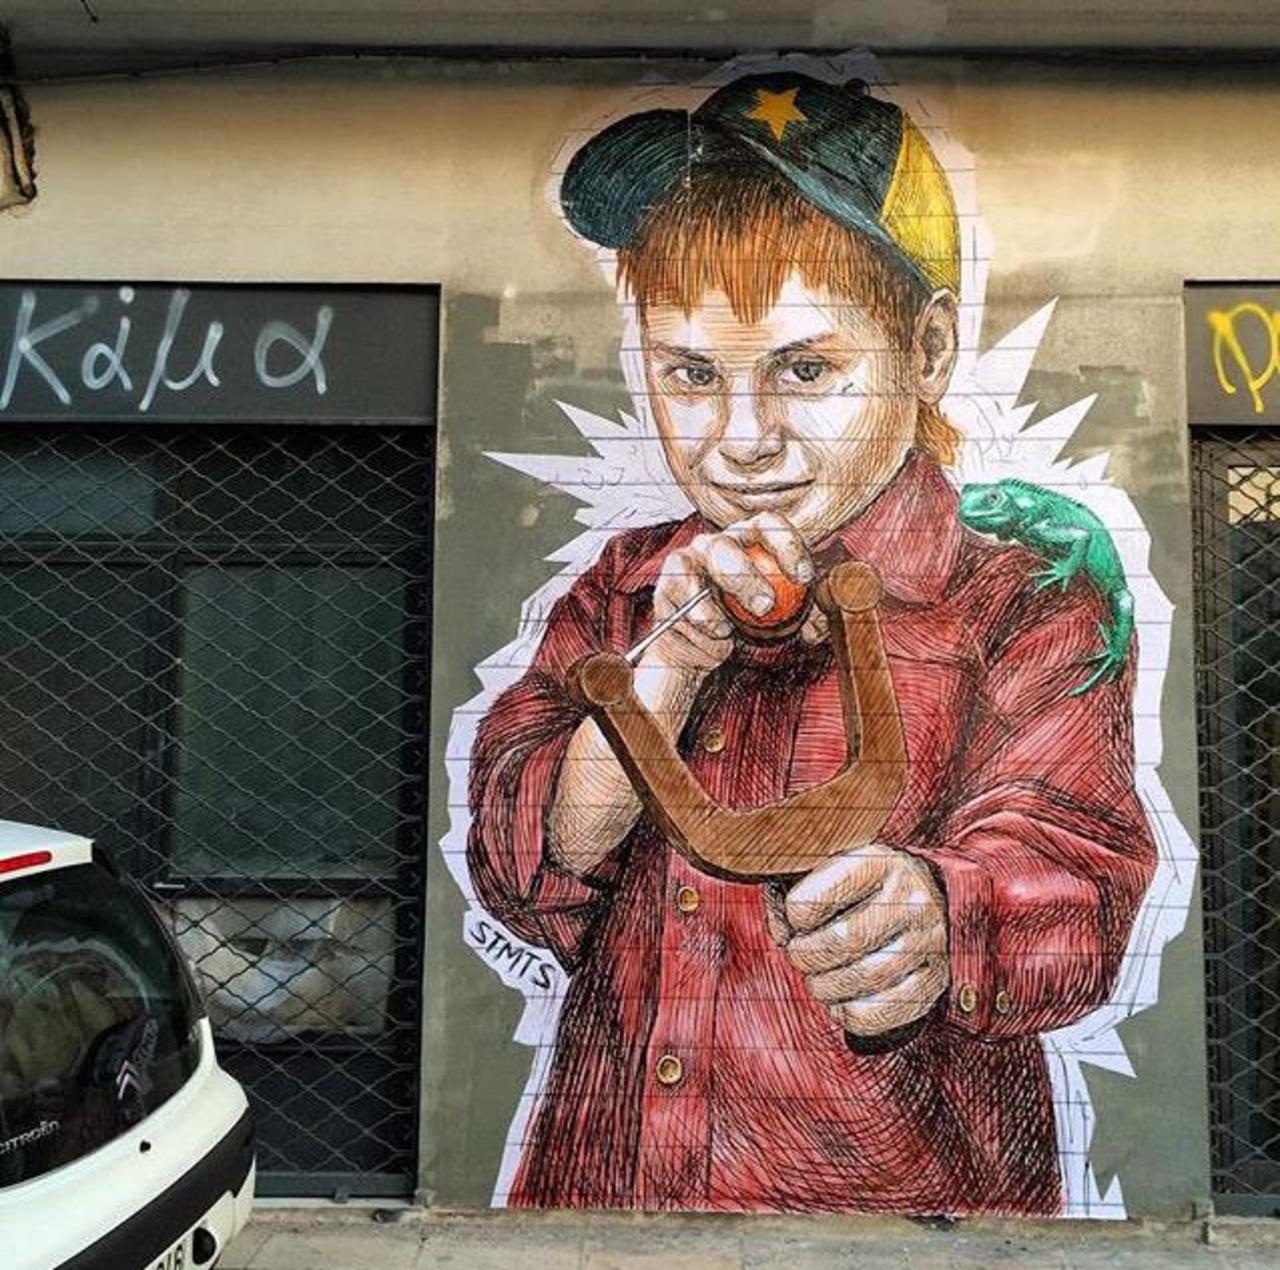 Street Art by STMTS in Athens

#art #graffiti #mural #streetart http://t.co/byAP1Uvfik